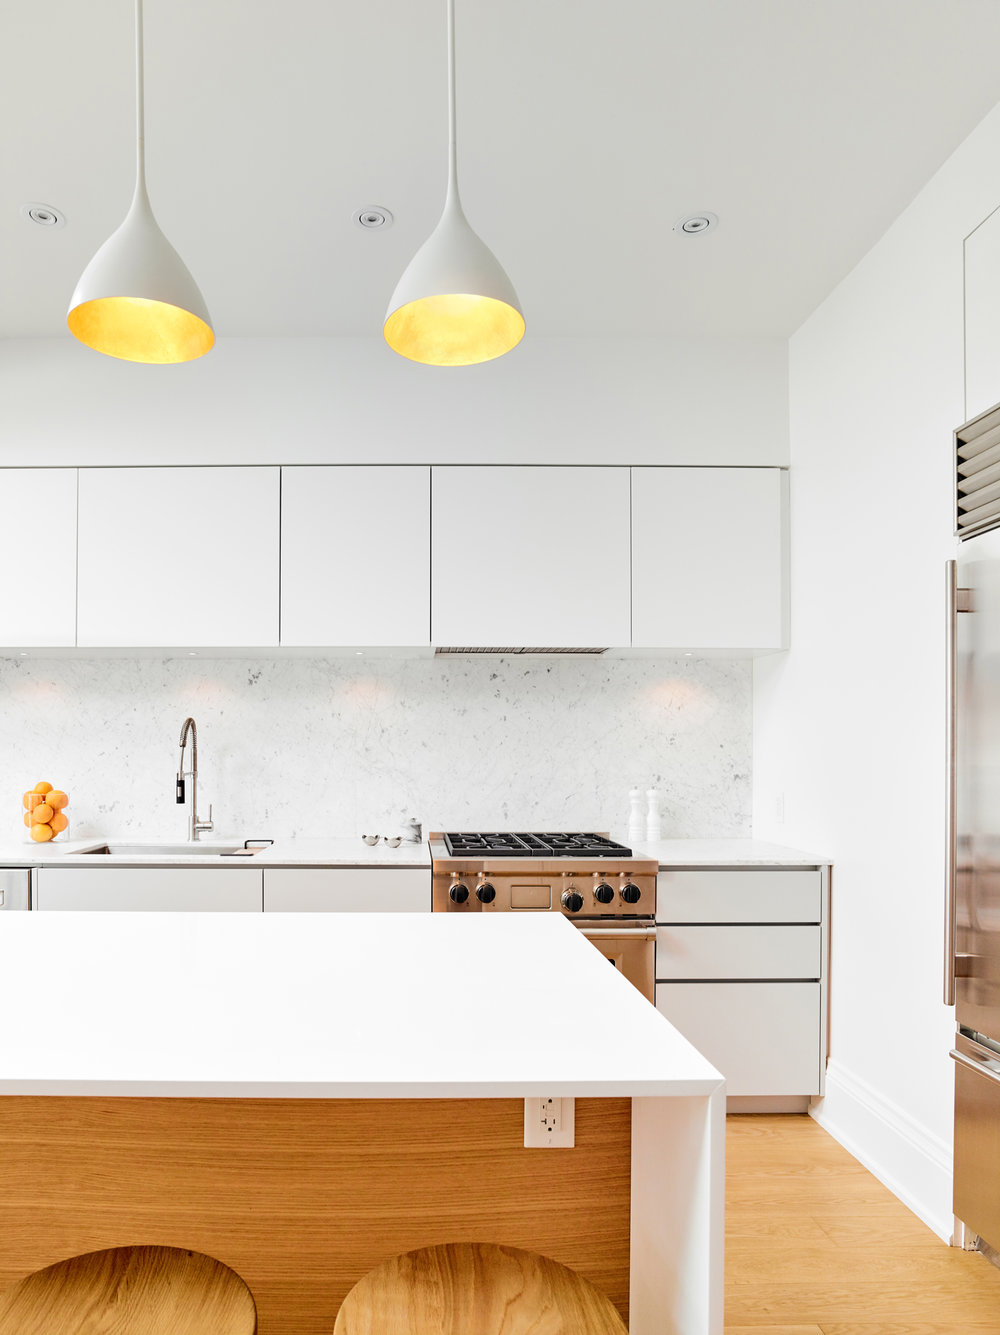 Pendants-accentuate-the-modern-minimal-style-of-the-kitchen-while-adding-metallic-sparkle-12505